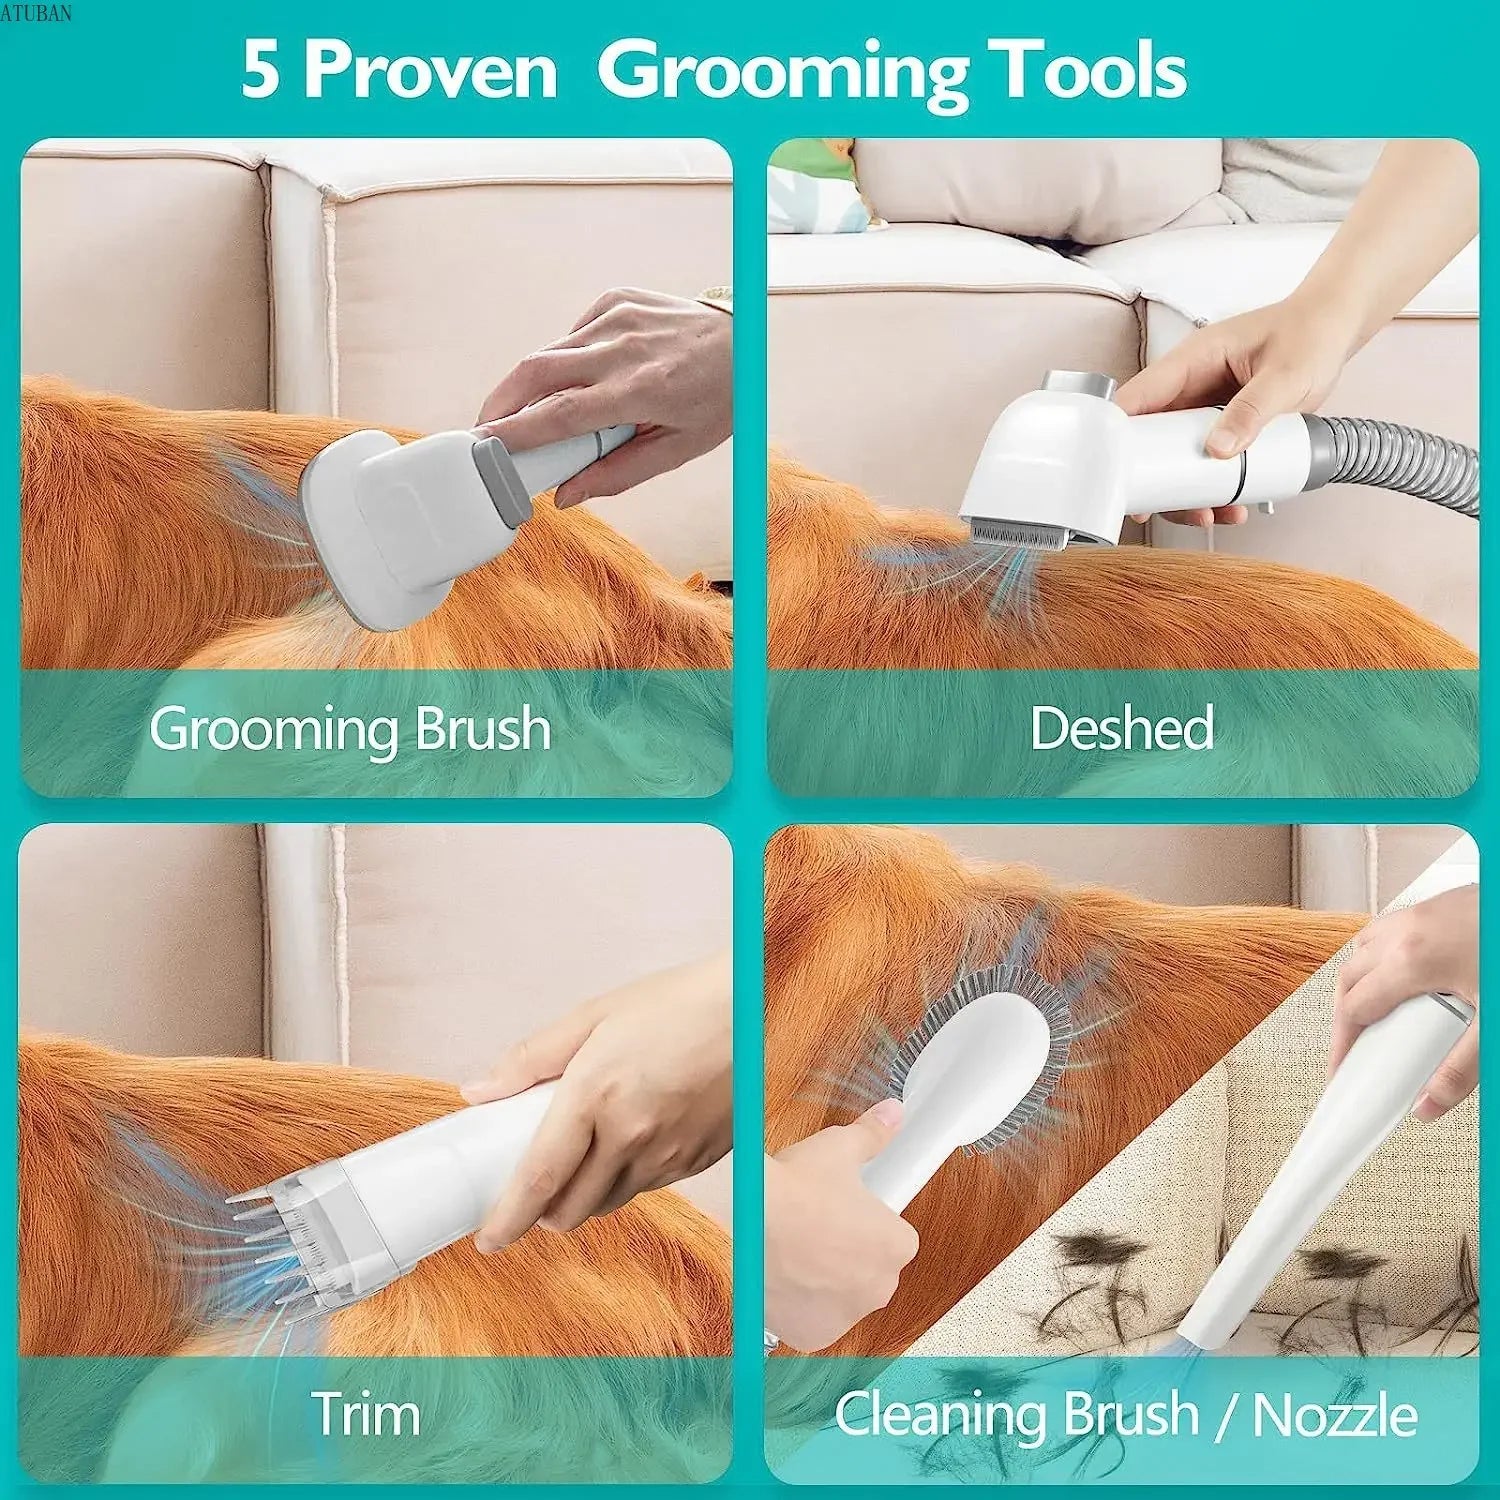 Pet grooming kit vacuum